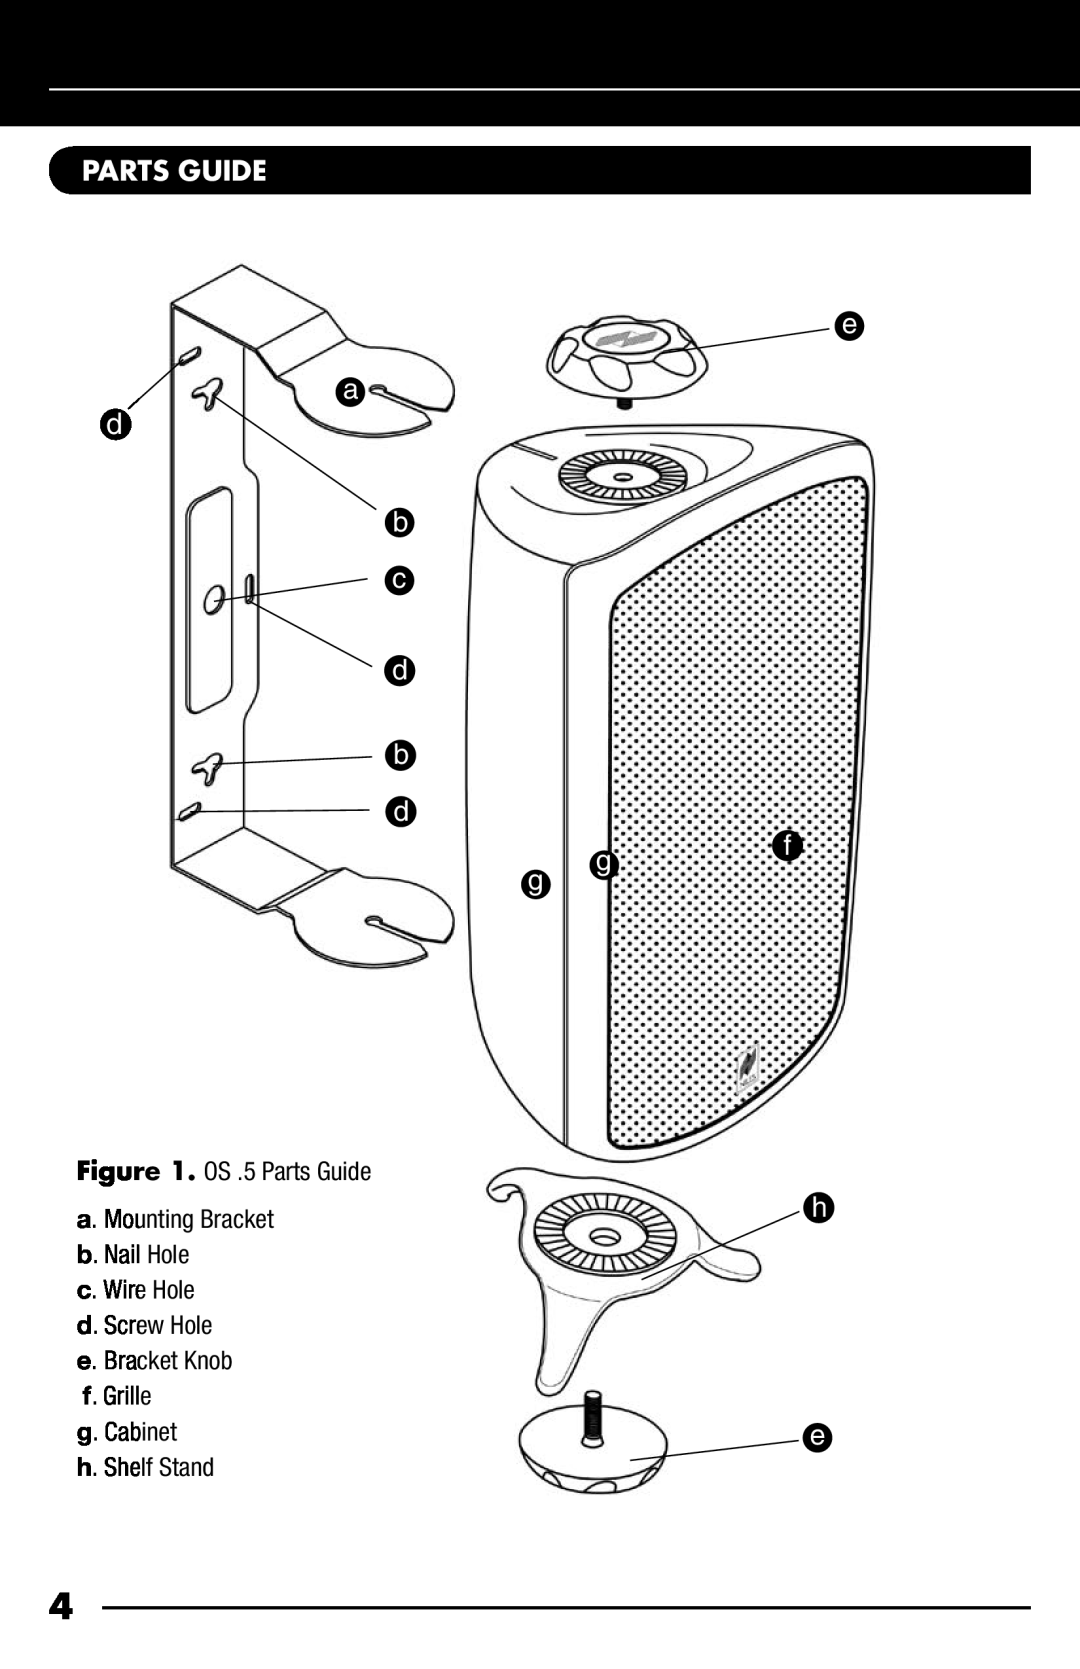 Niles Audio OS6.5 b c d b d, Parts Guide, a. Mounting Bracket, b. Nail Hole, c. Wire Hole, d. Screw Hole, e. Bracket Knob 